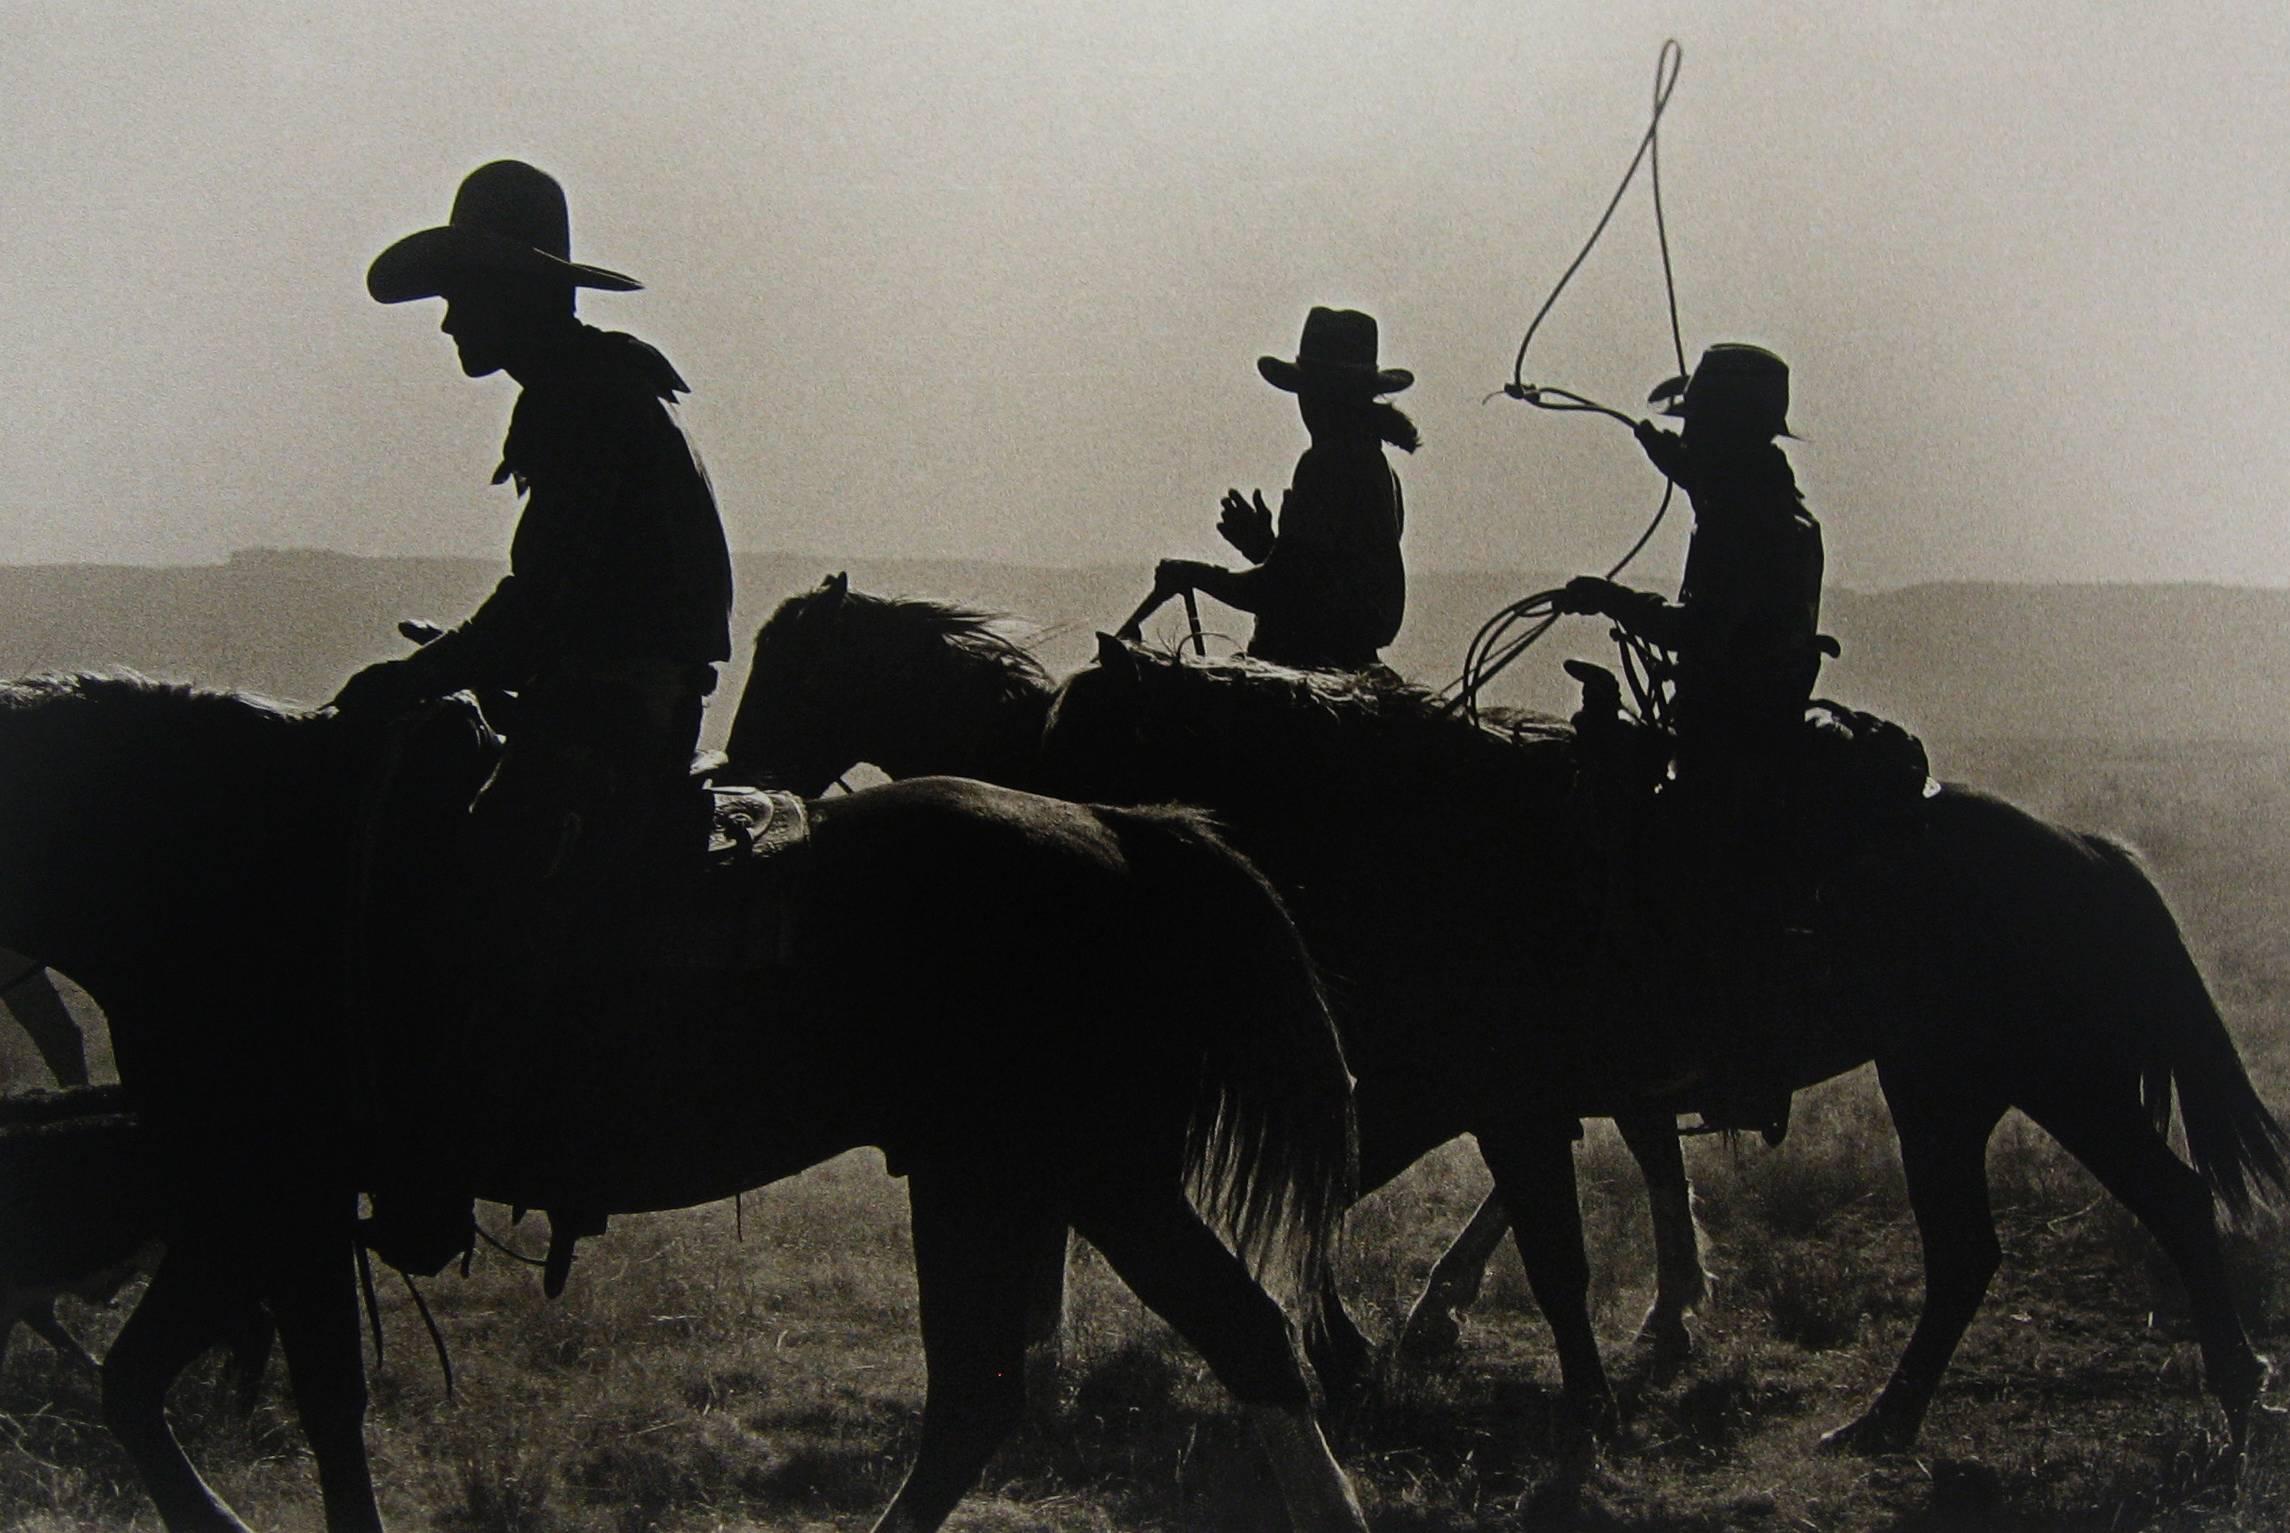 Untitled (Three Cowboys on Horseback) by Bank Langmore, c. 1973-75